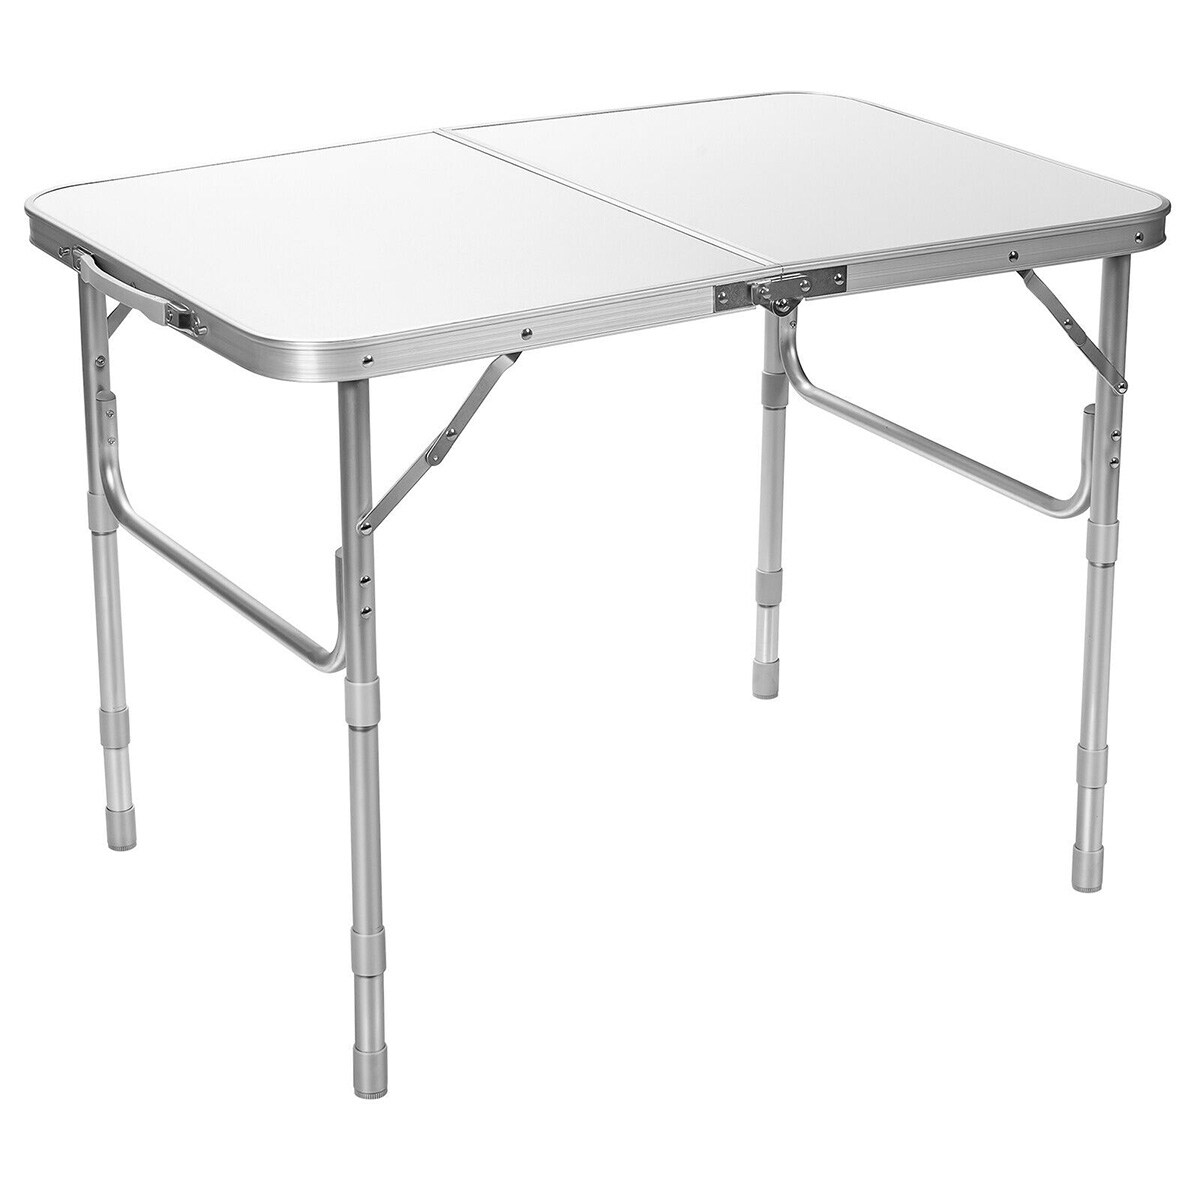 ARB Compact Aluminum Camping Table - 34 x 27.5 x 27.5